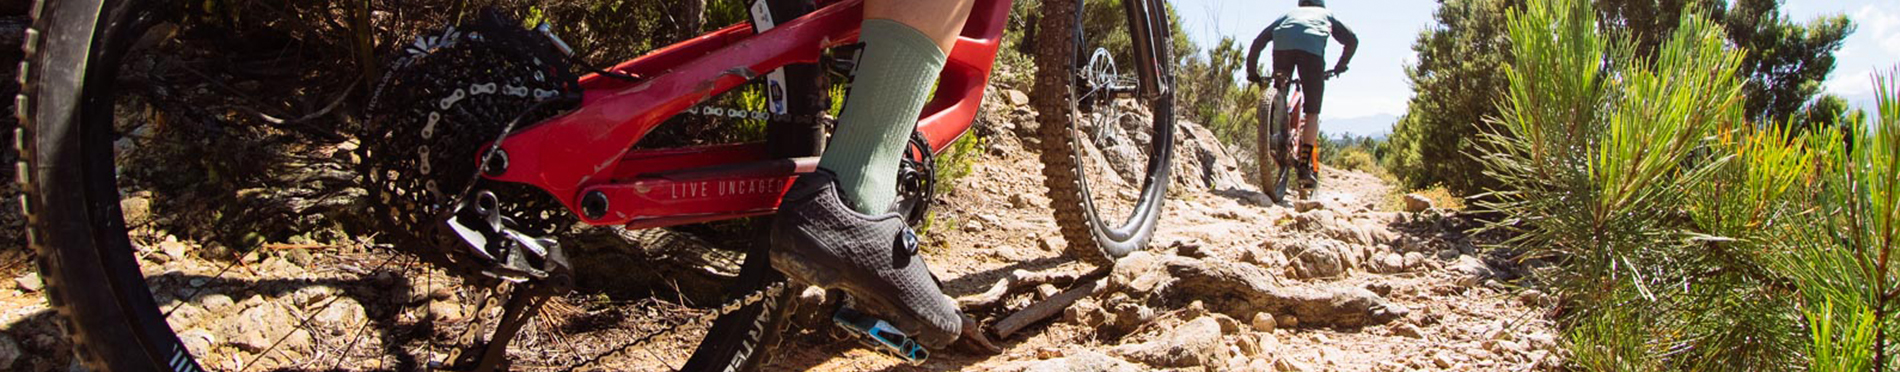 w-bike-apparel-socks-banner-1900x372